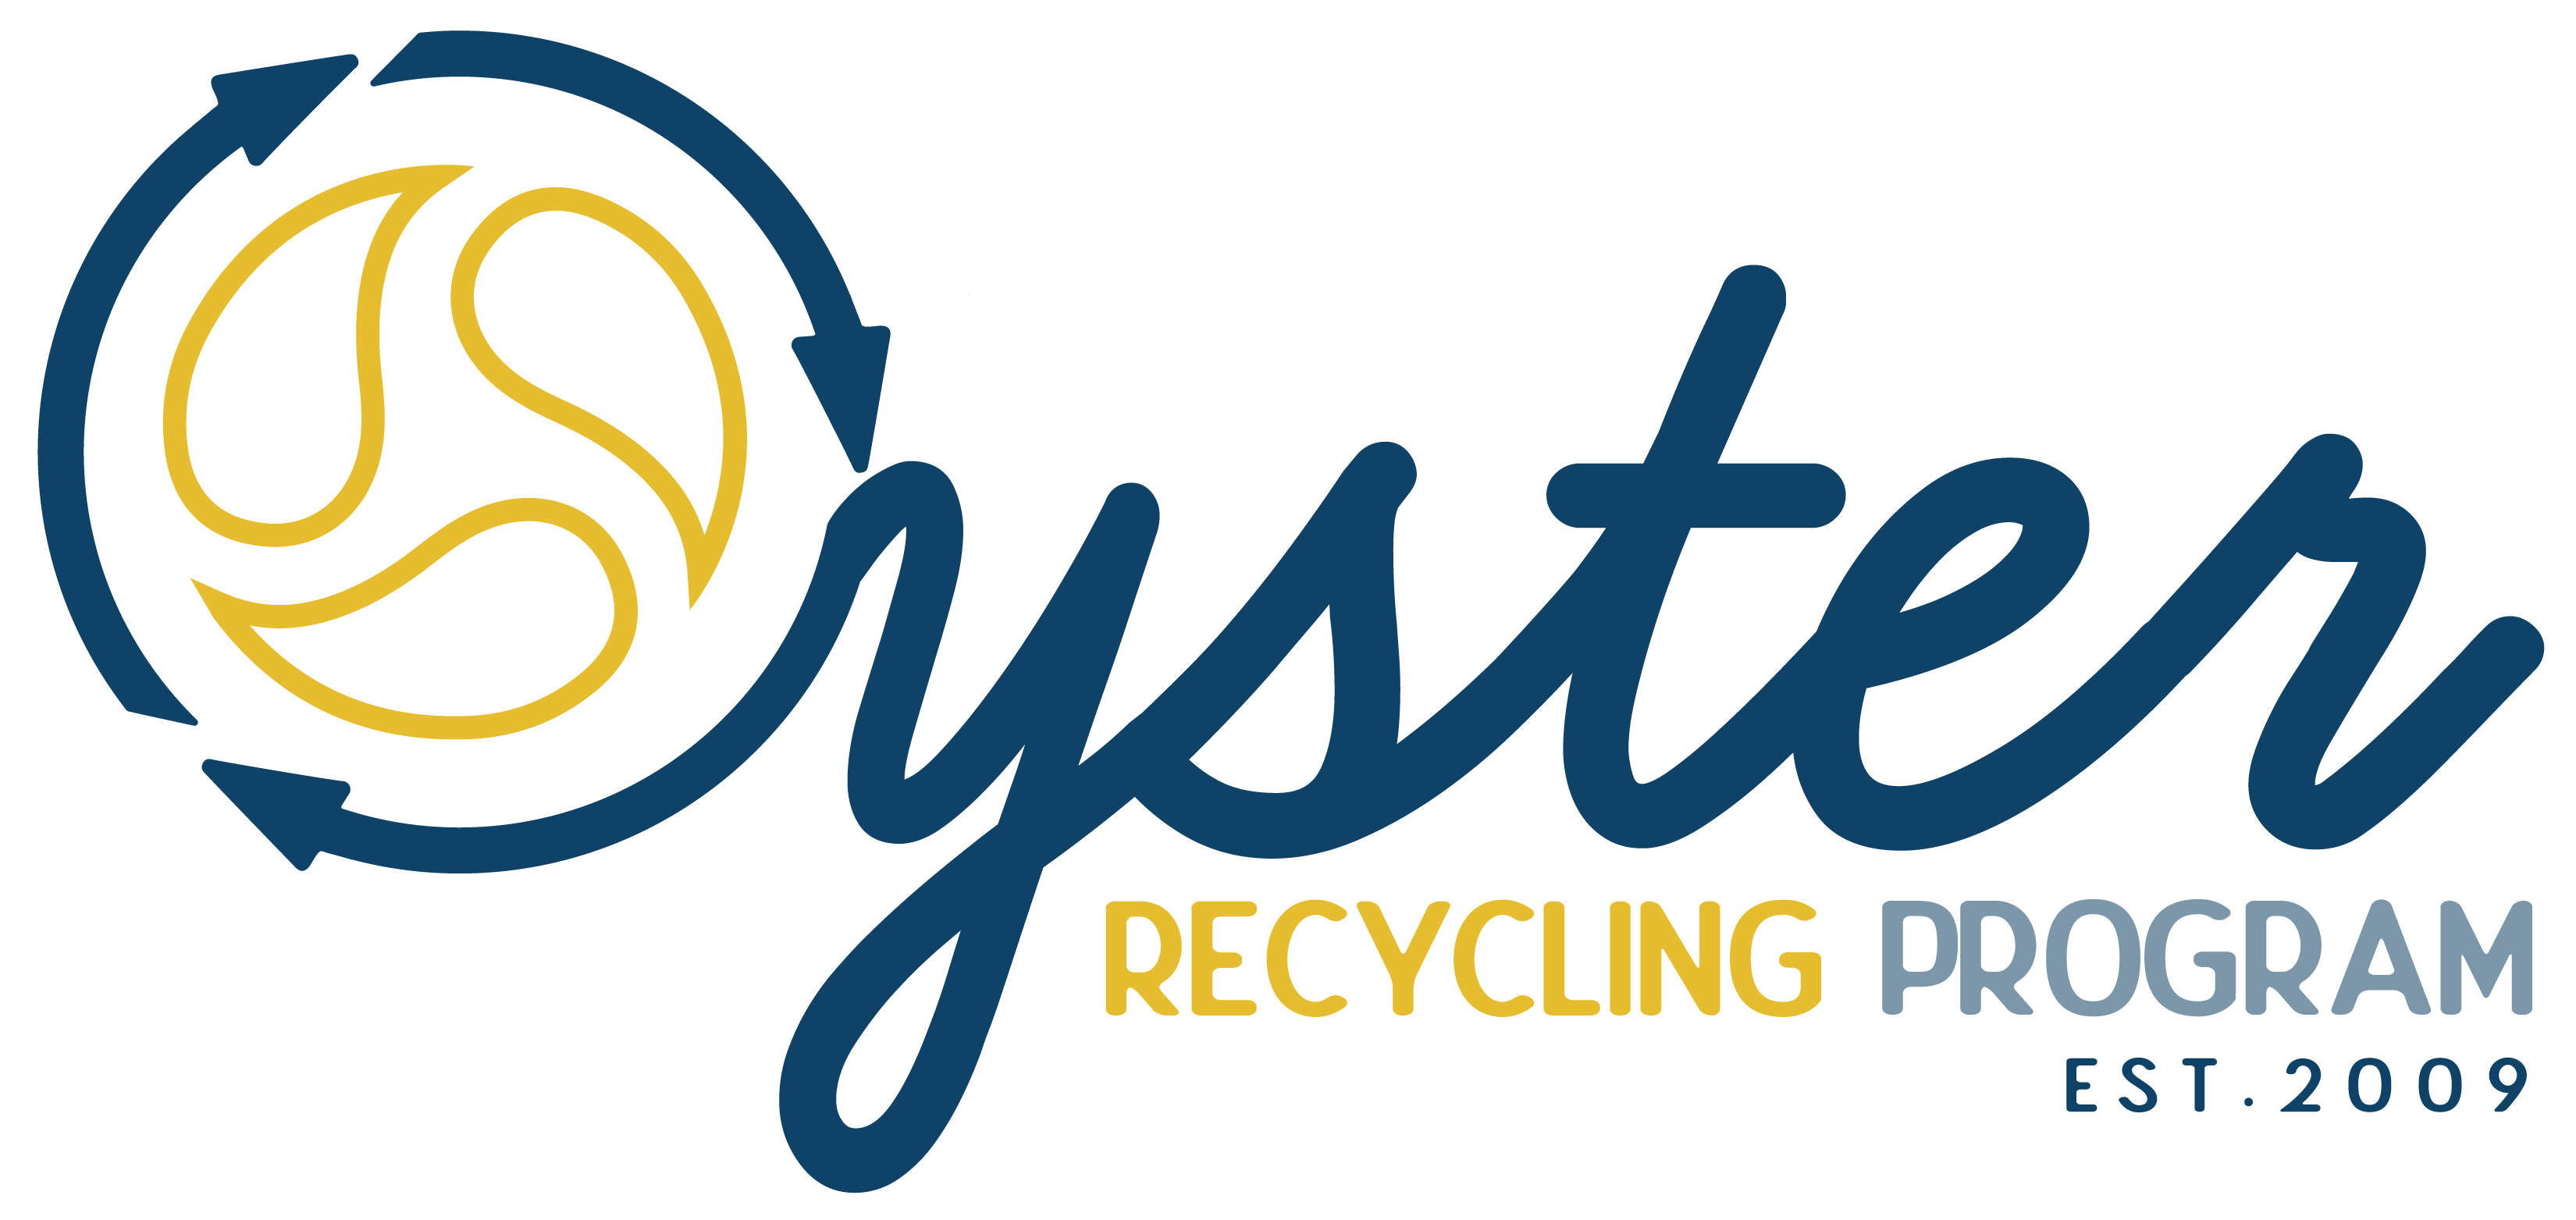 Oyster Recycling Program